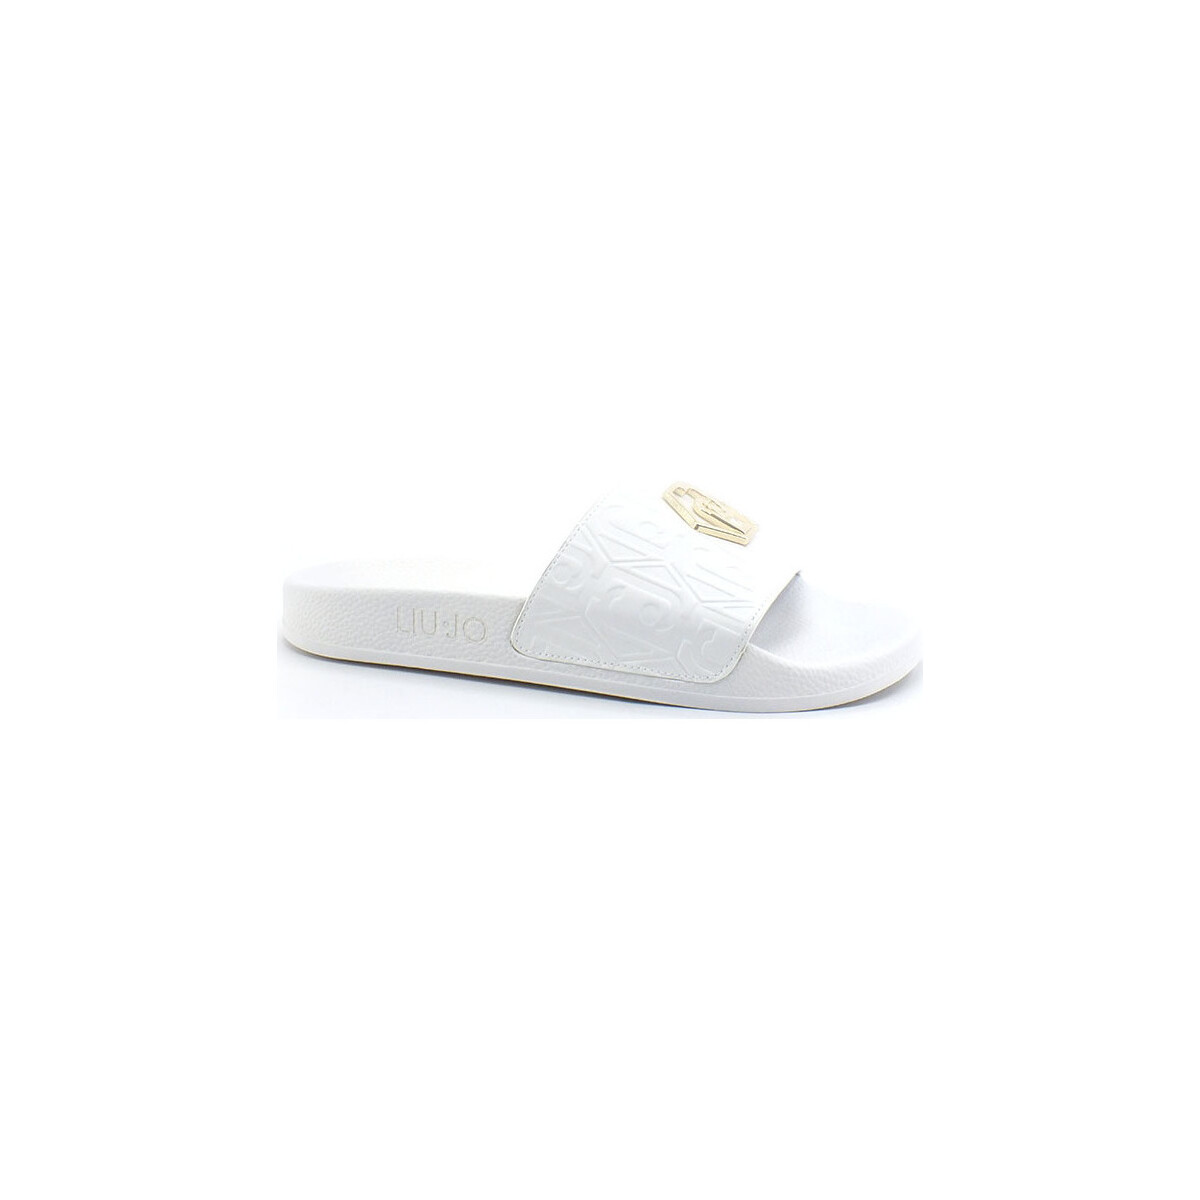 Chaussures Femme Bottes Liu Jo Kos 01 Ciabatta Slipper Spreading Logo White BA2173EX098 Blanc